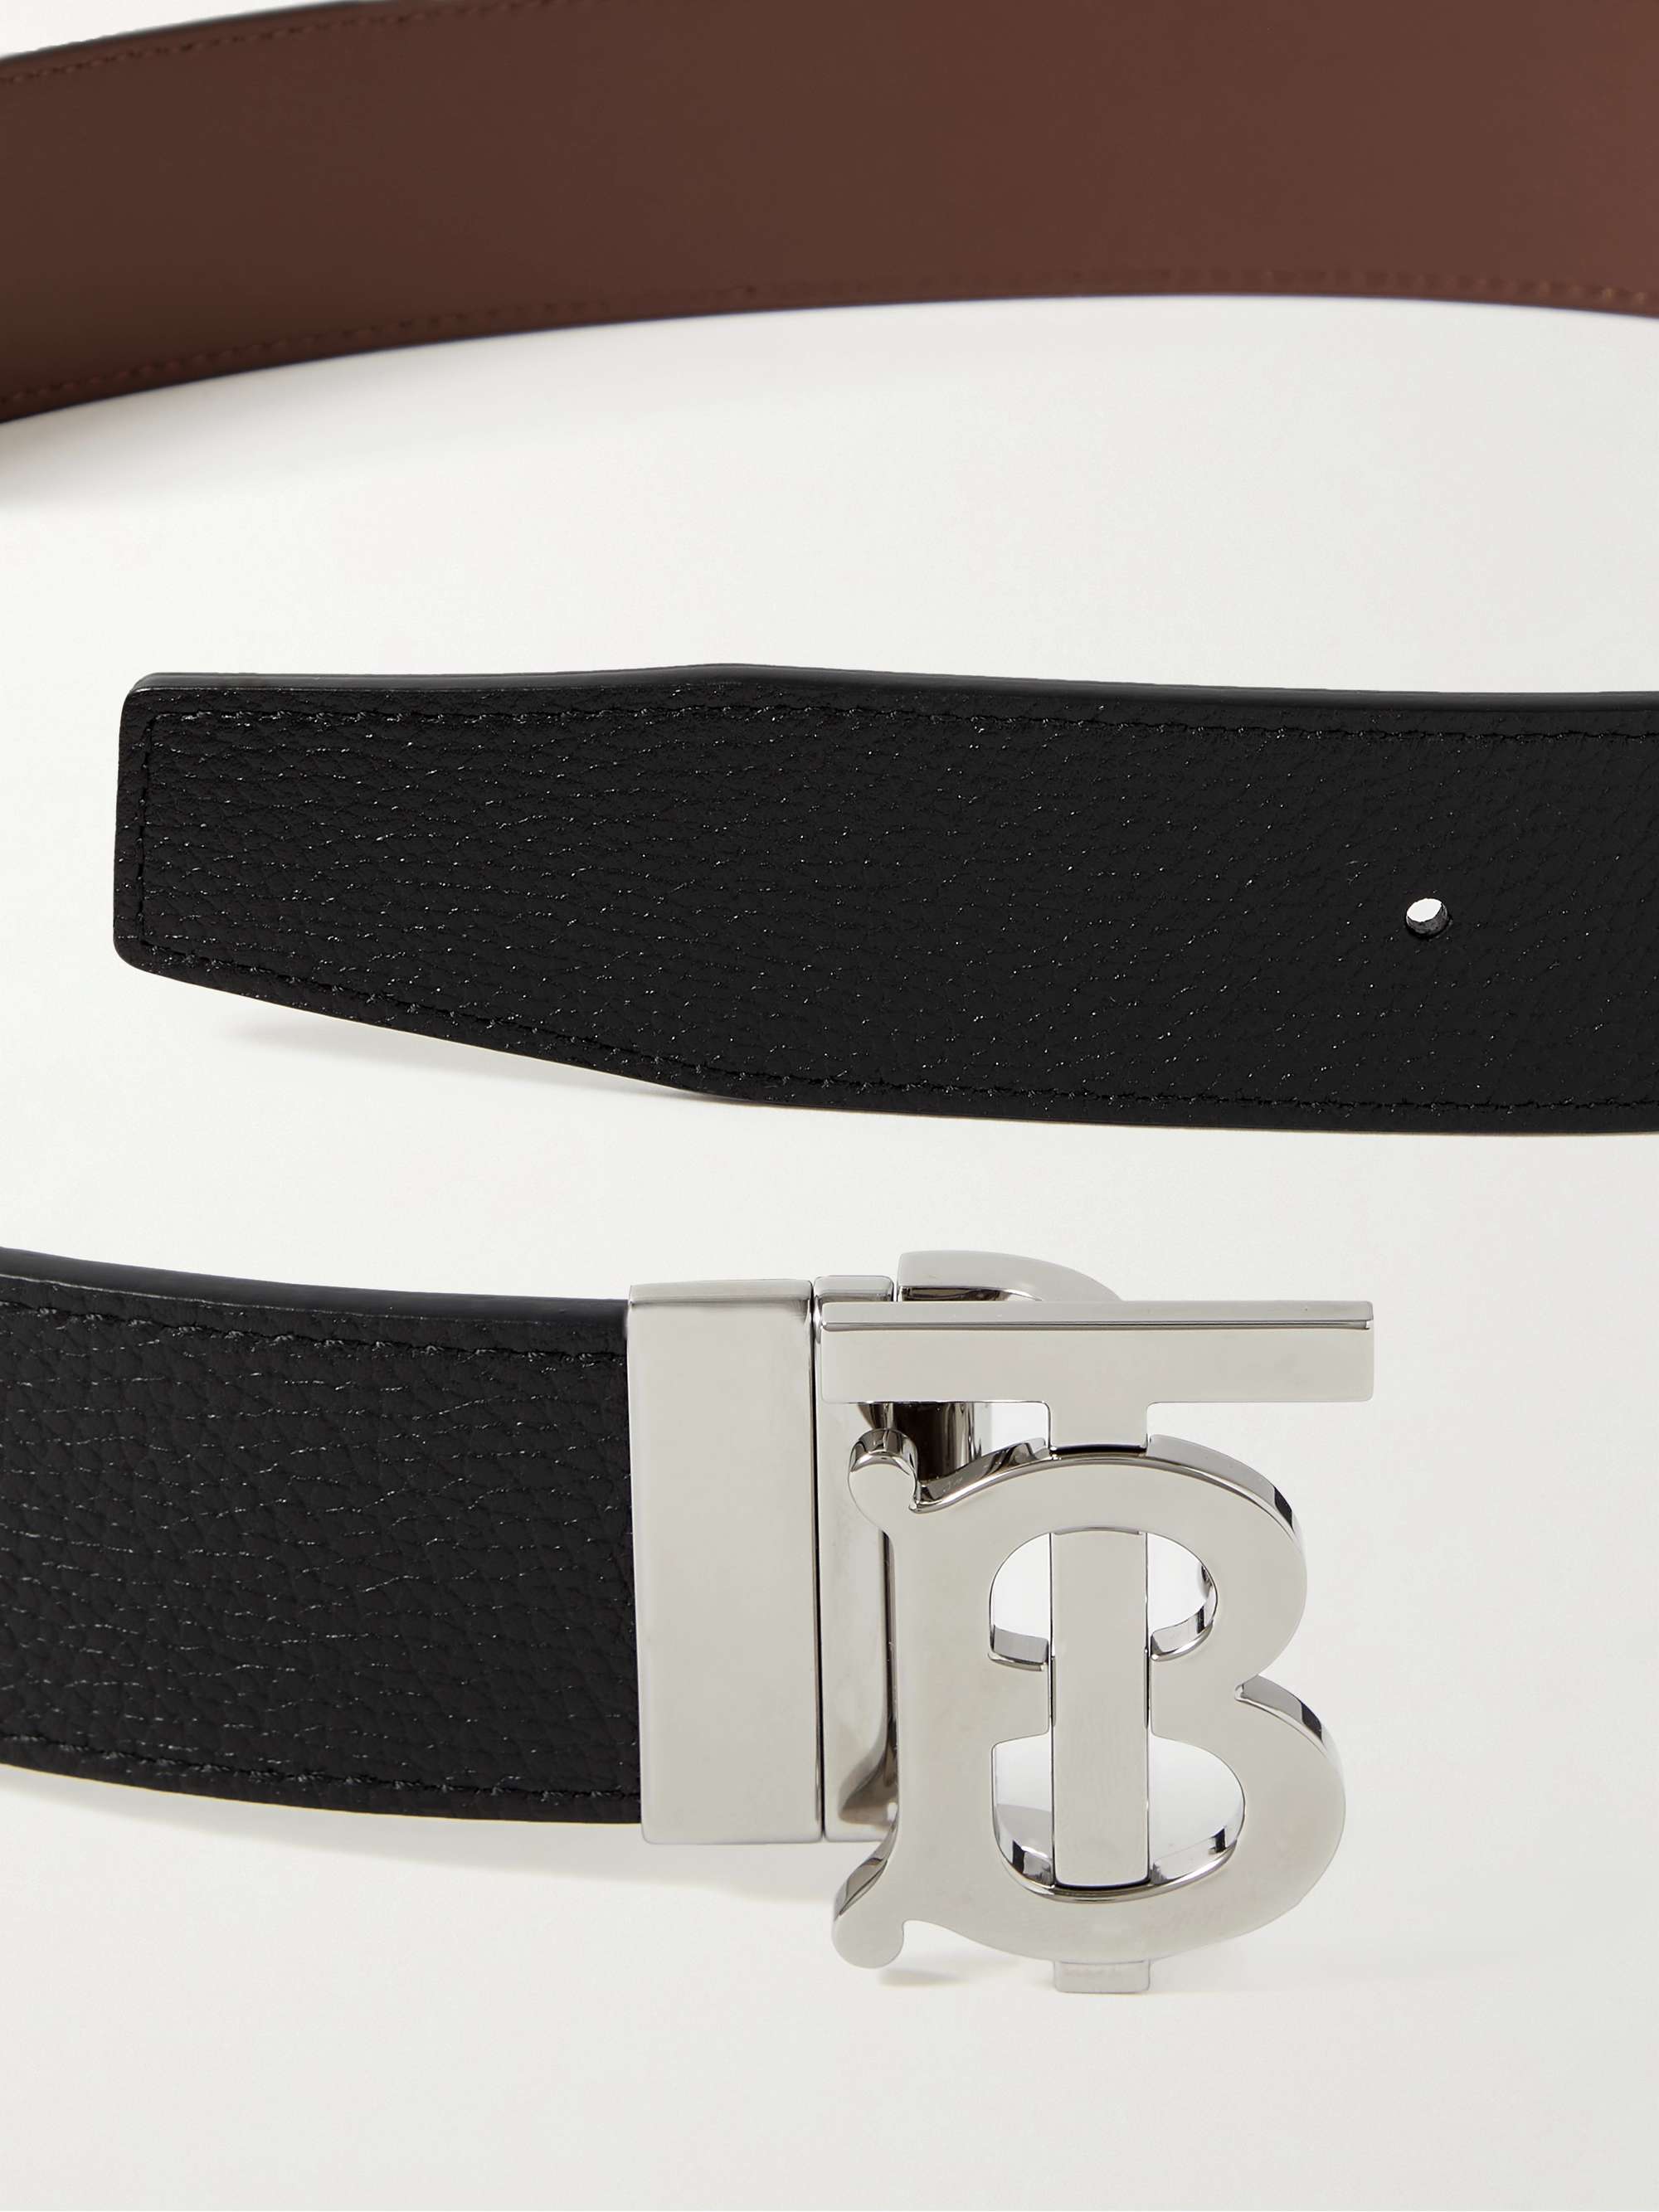 Burberry Silver Belts for Men